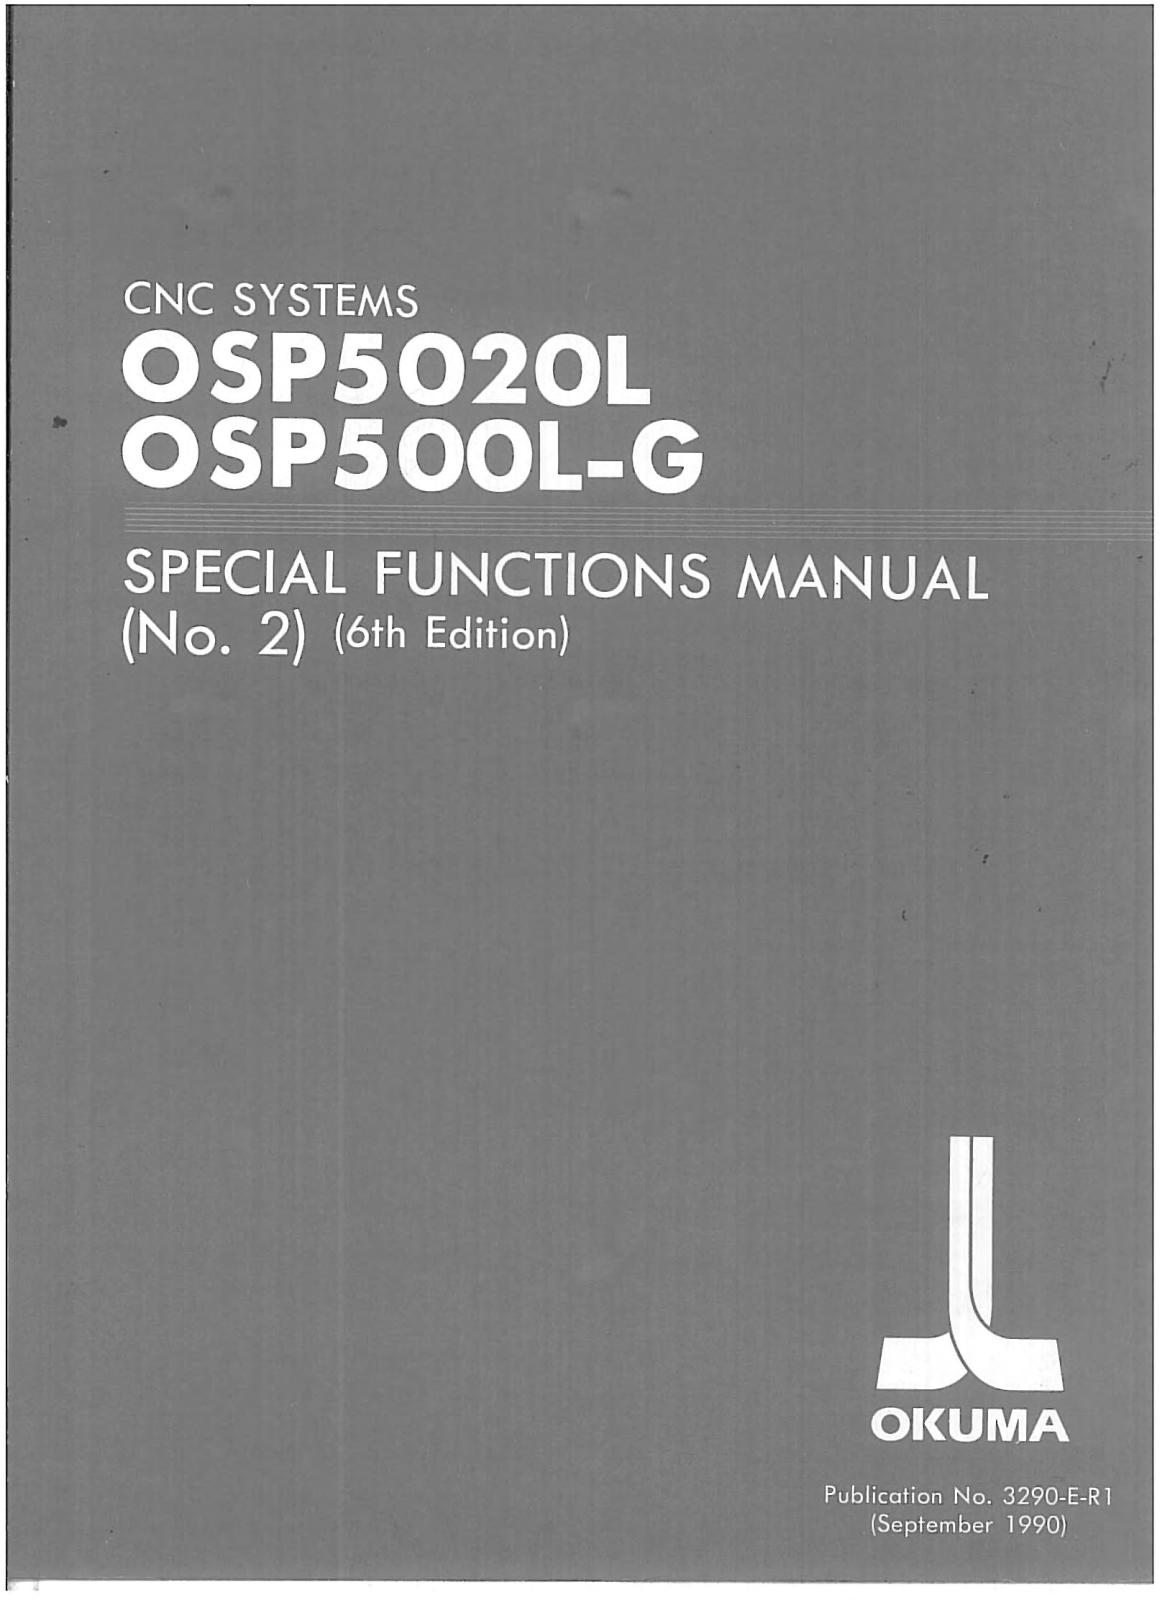 okuma OSP5020L User Manual